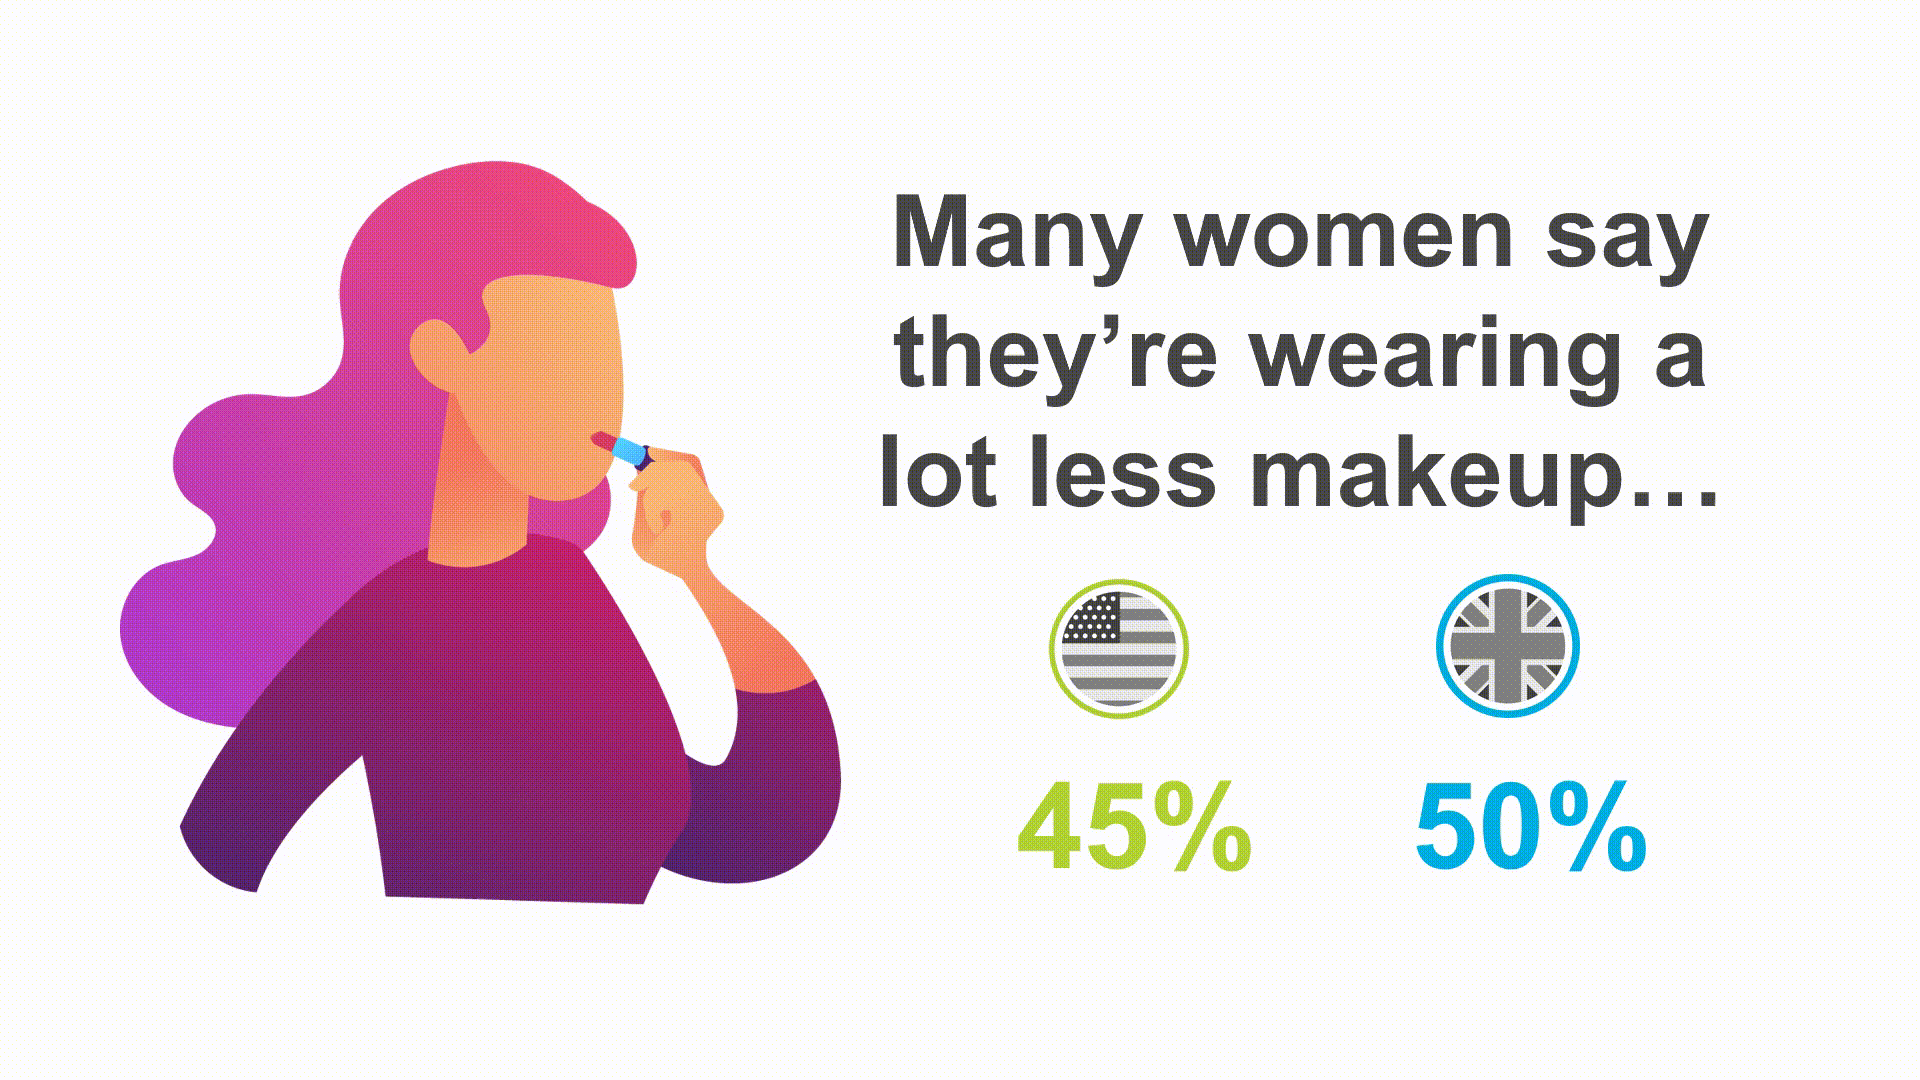 women are wearing less makeup